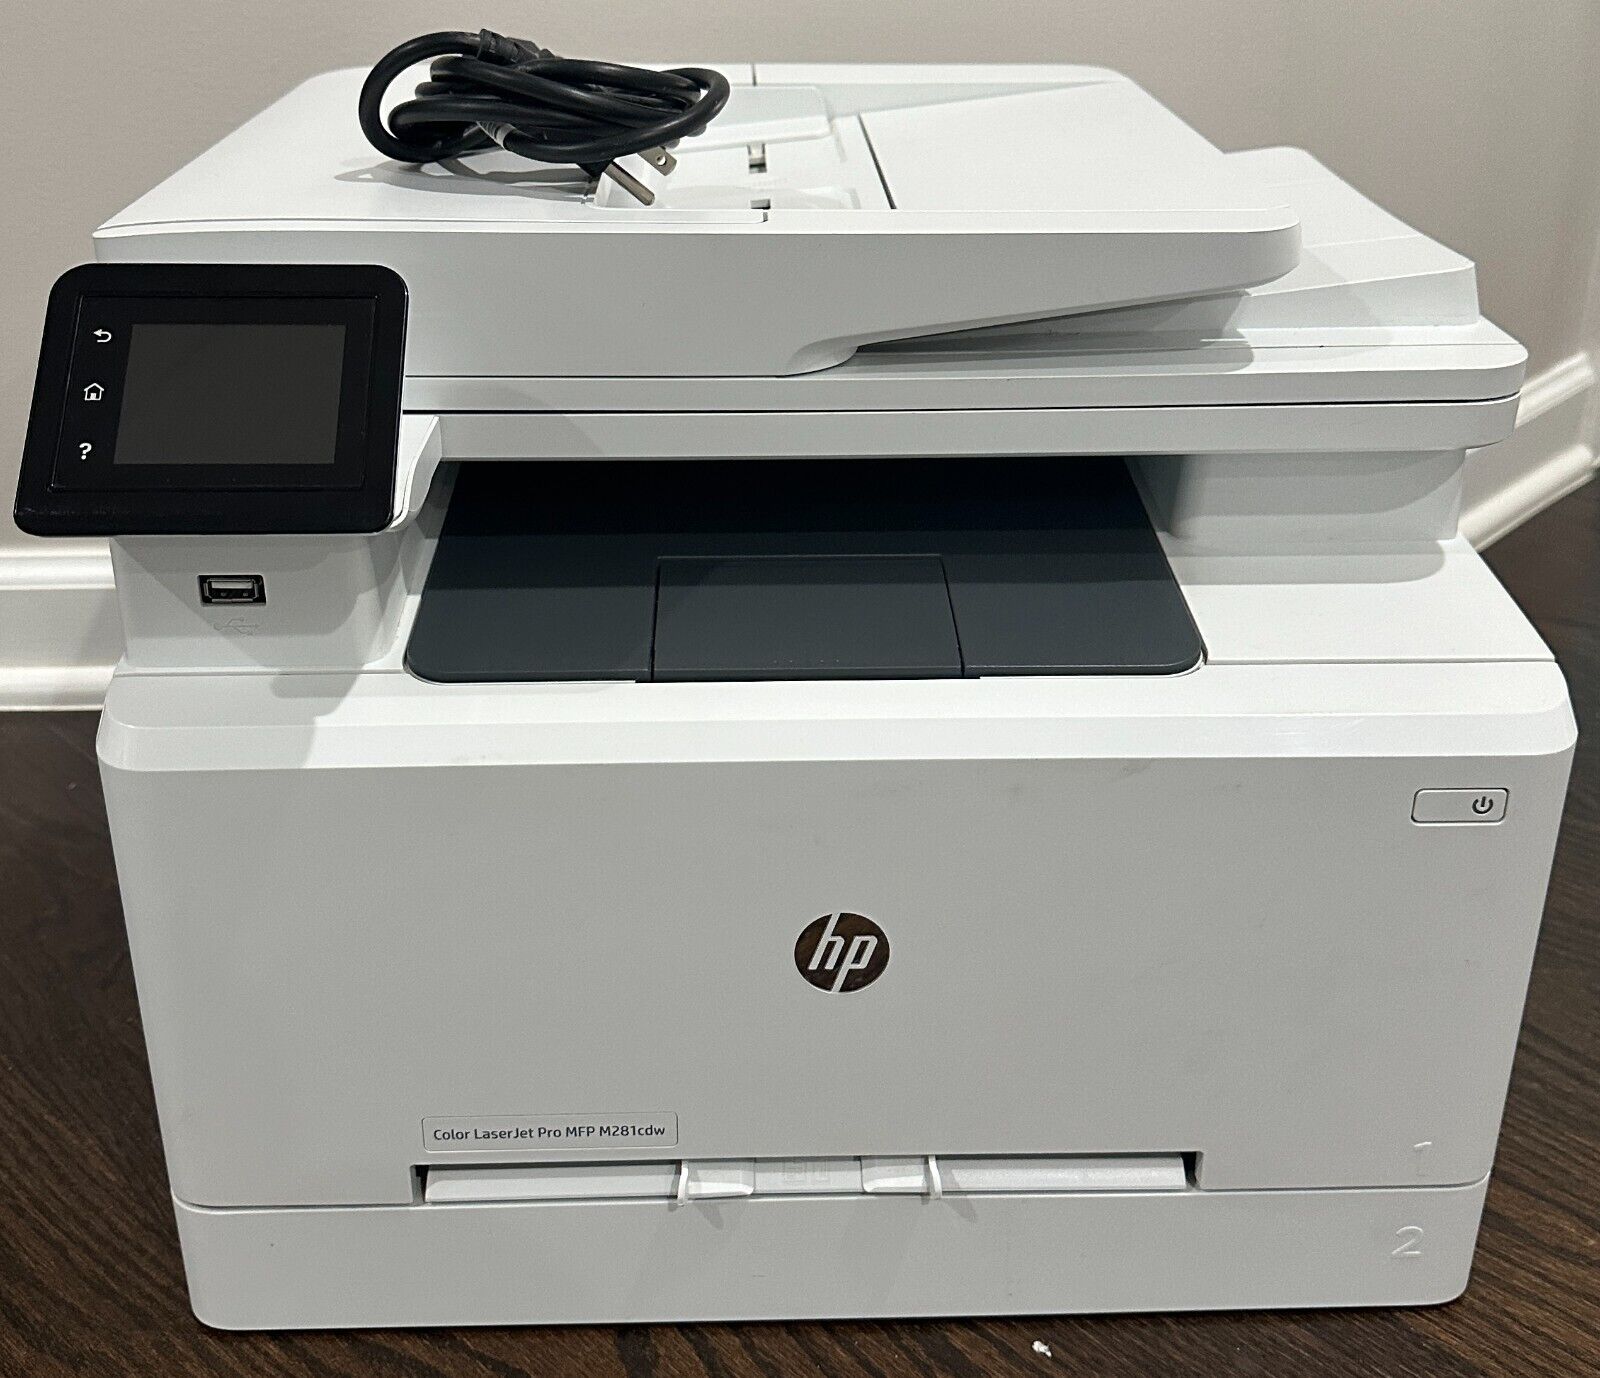 HP Color LaserJet Pro MFP M281cdw Premium Edition All-in-one Wireless Printer